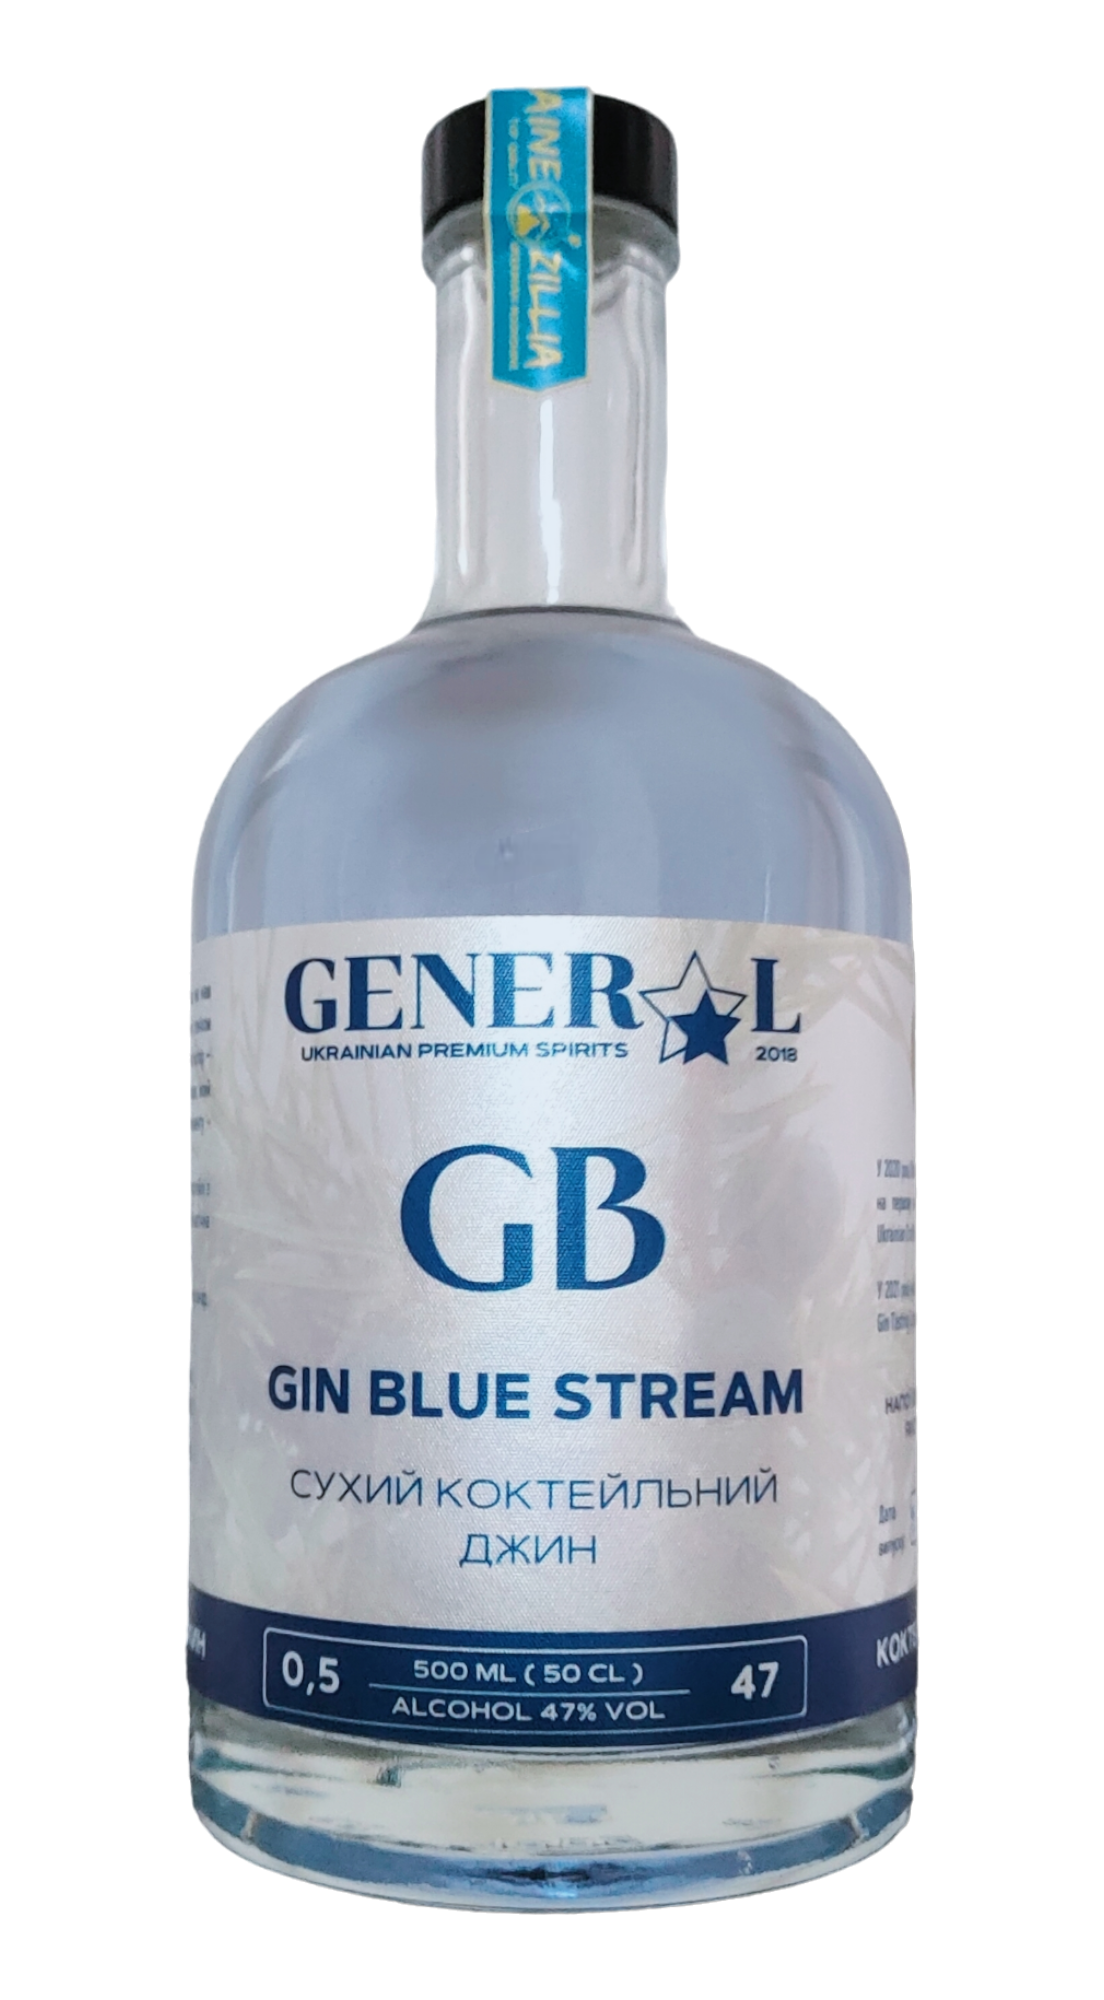 GIN Blue Stream